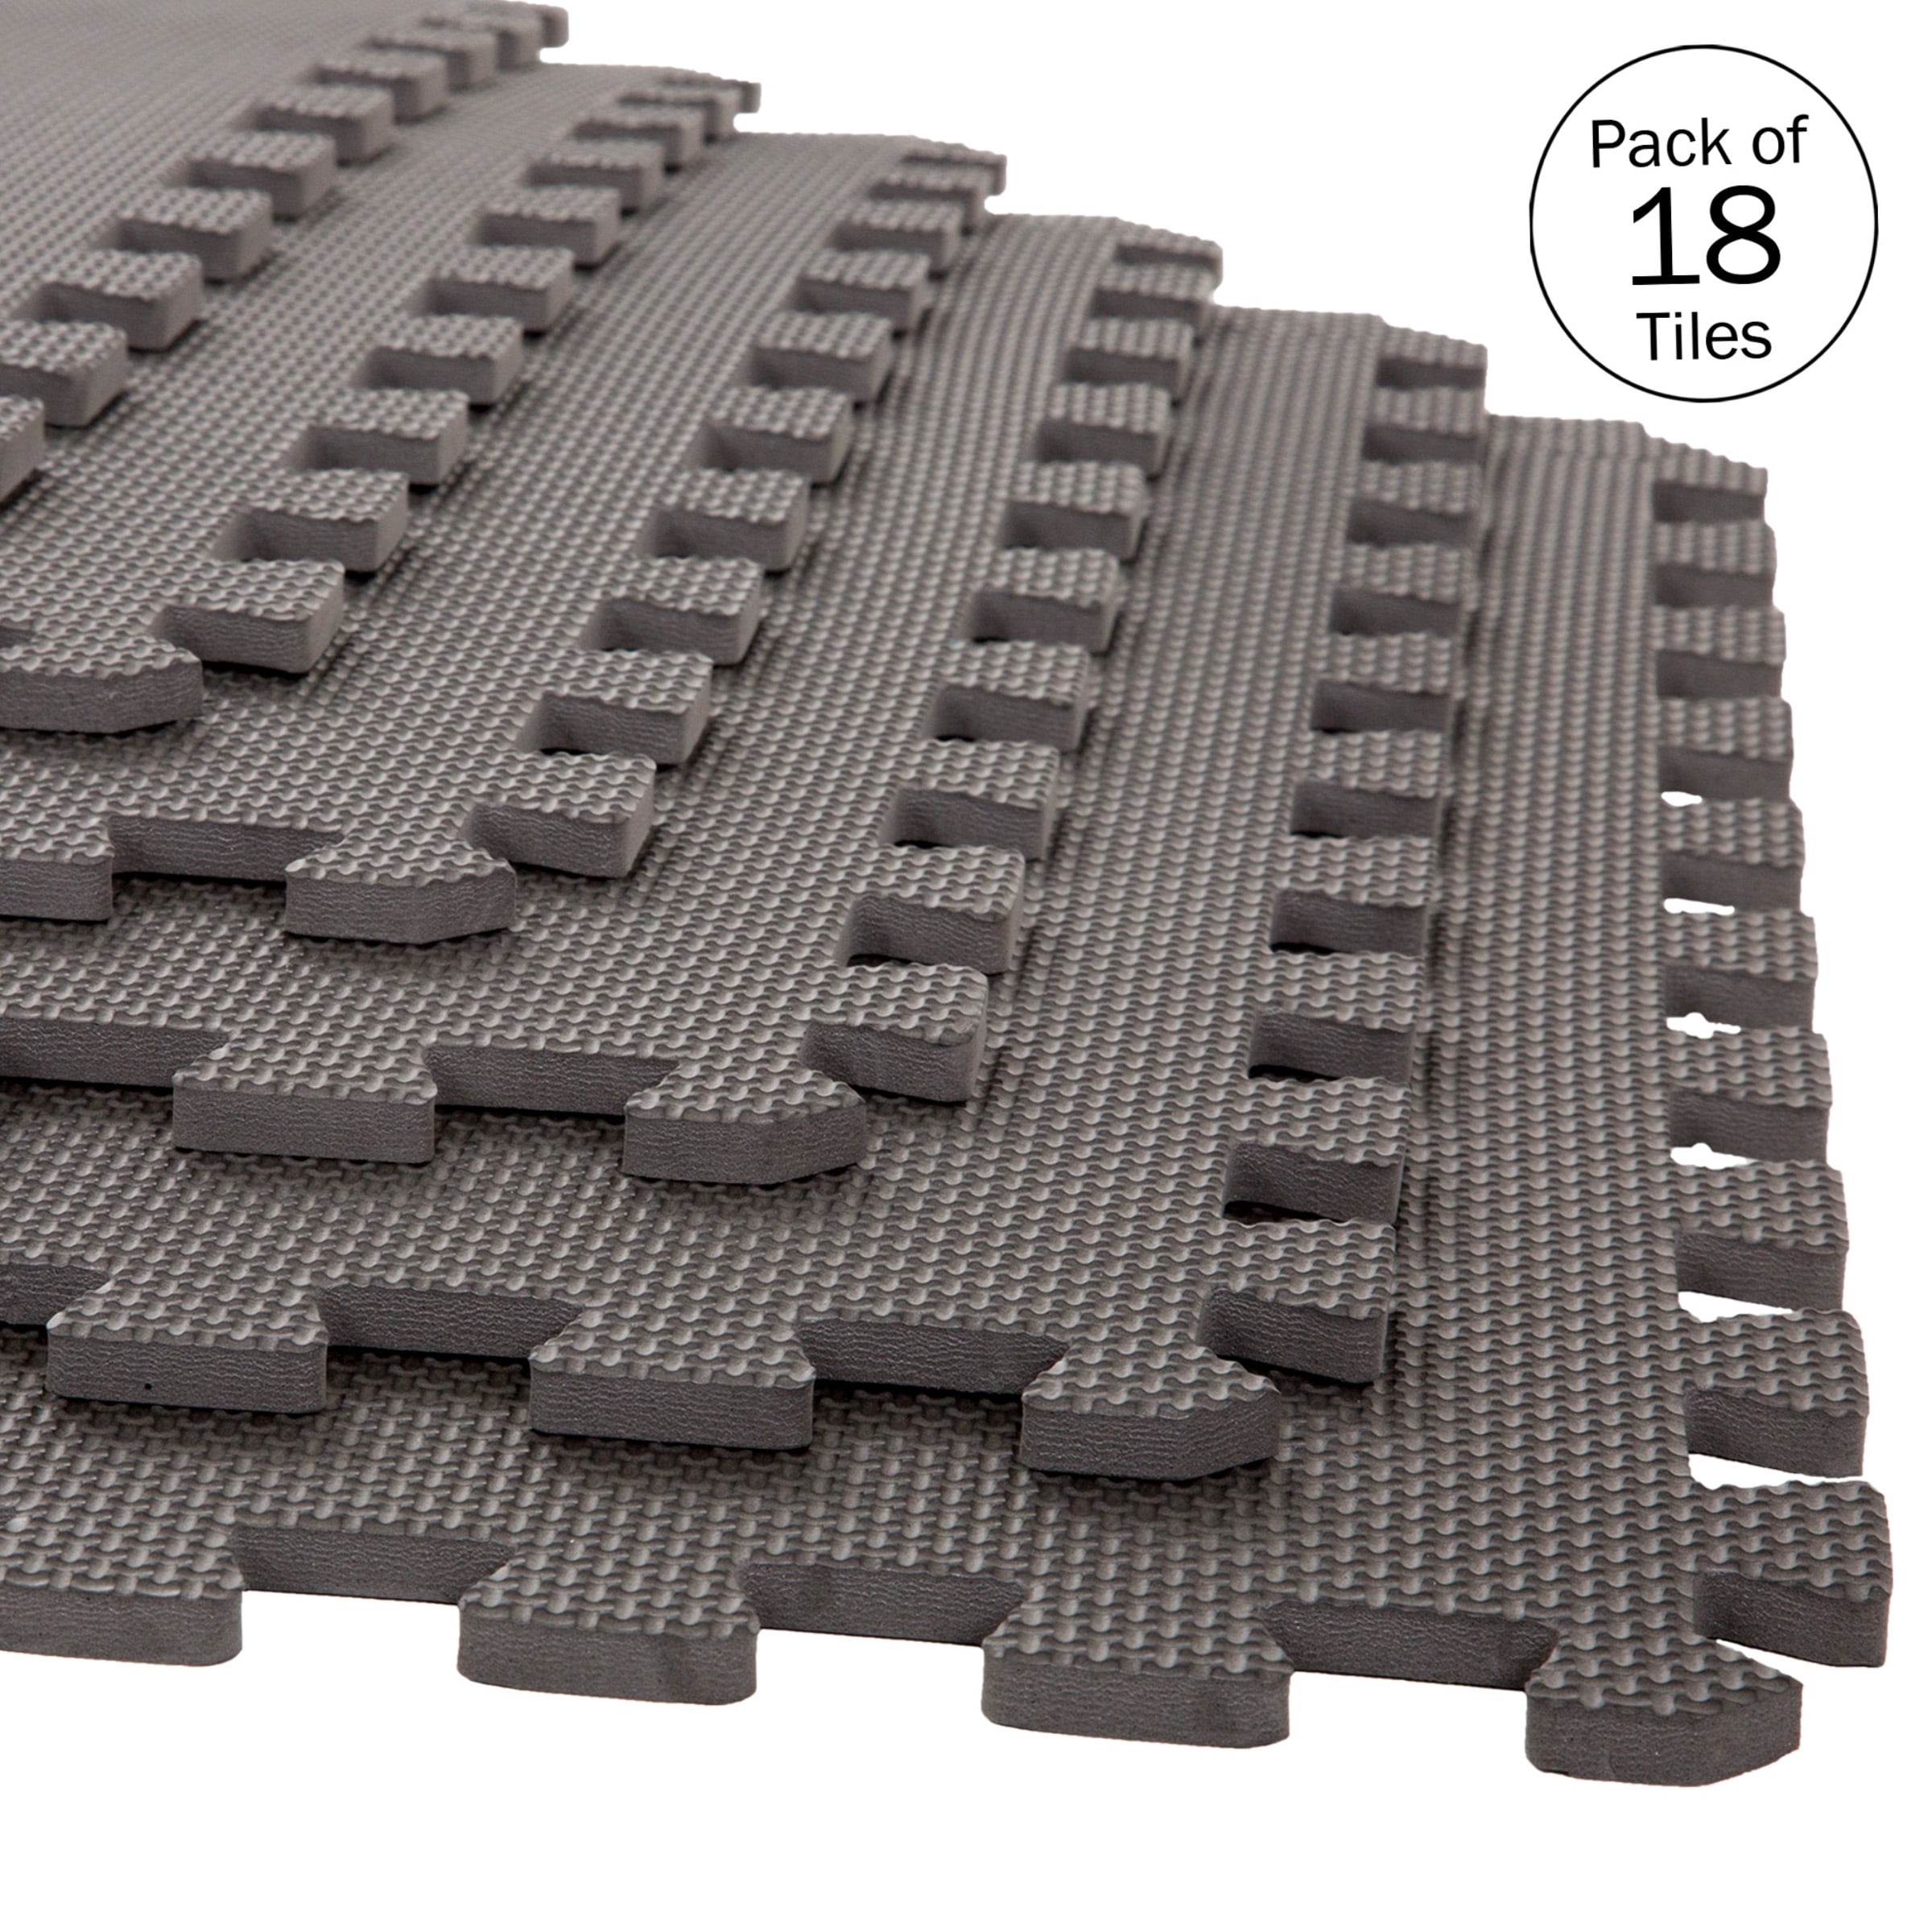 Basement-6PC Set Stalwart Foam Mat Floor Tiles-Interlocking EVA Foam Padding with Soft Carpet Top for Exercise Kid Playroom Garage Yoga Black 